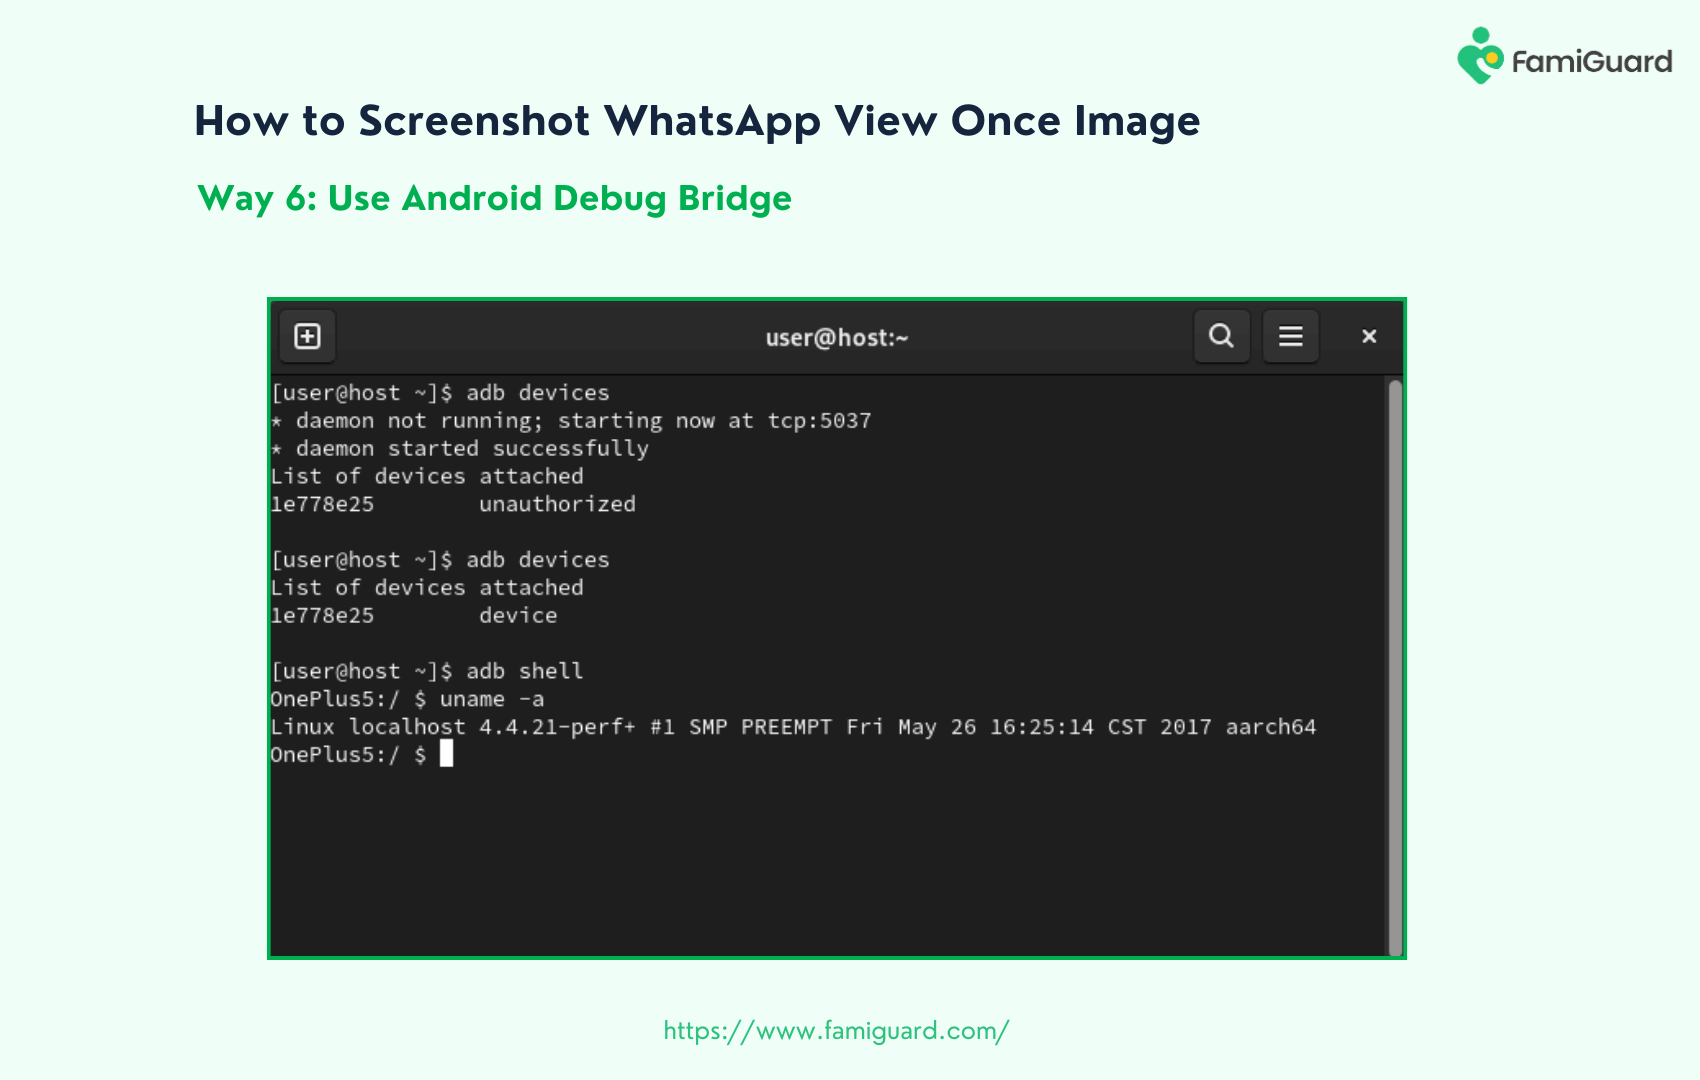 Use Android Debug Bridge to Screenshot WhatsApp View Once Image